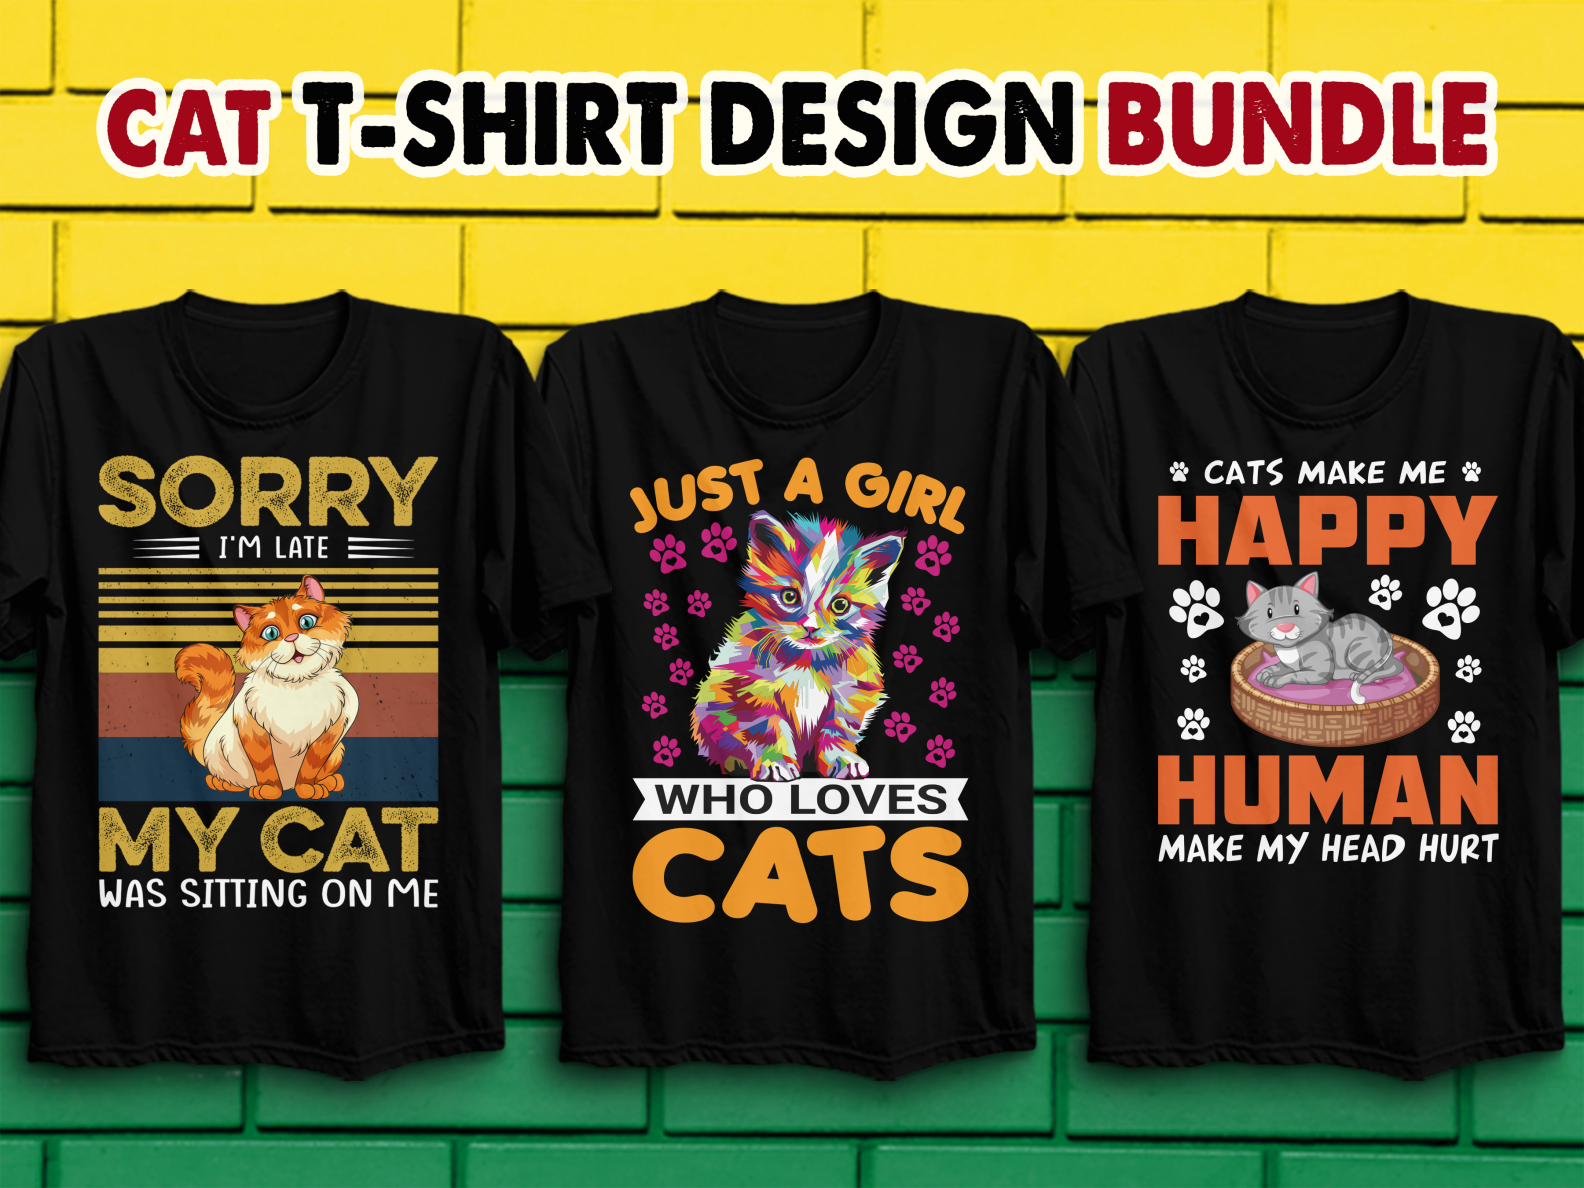 Cat T-Shirt Design Bundle by Biswas Hafizur Rahman on Dribbble